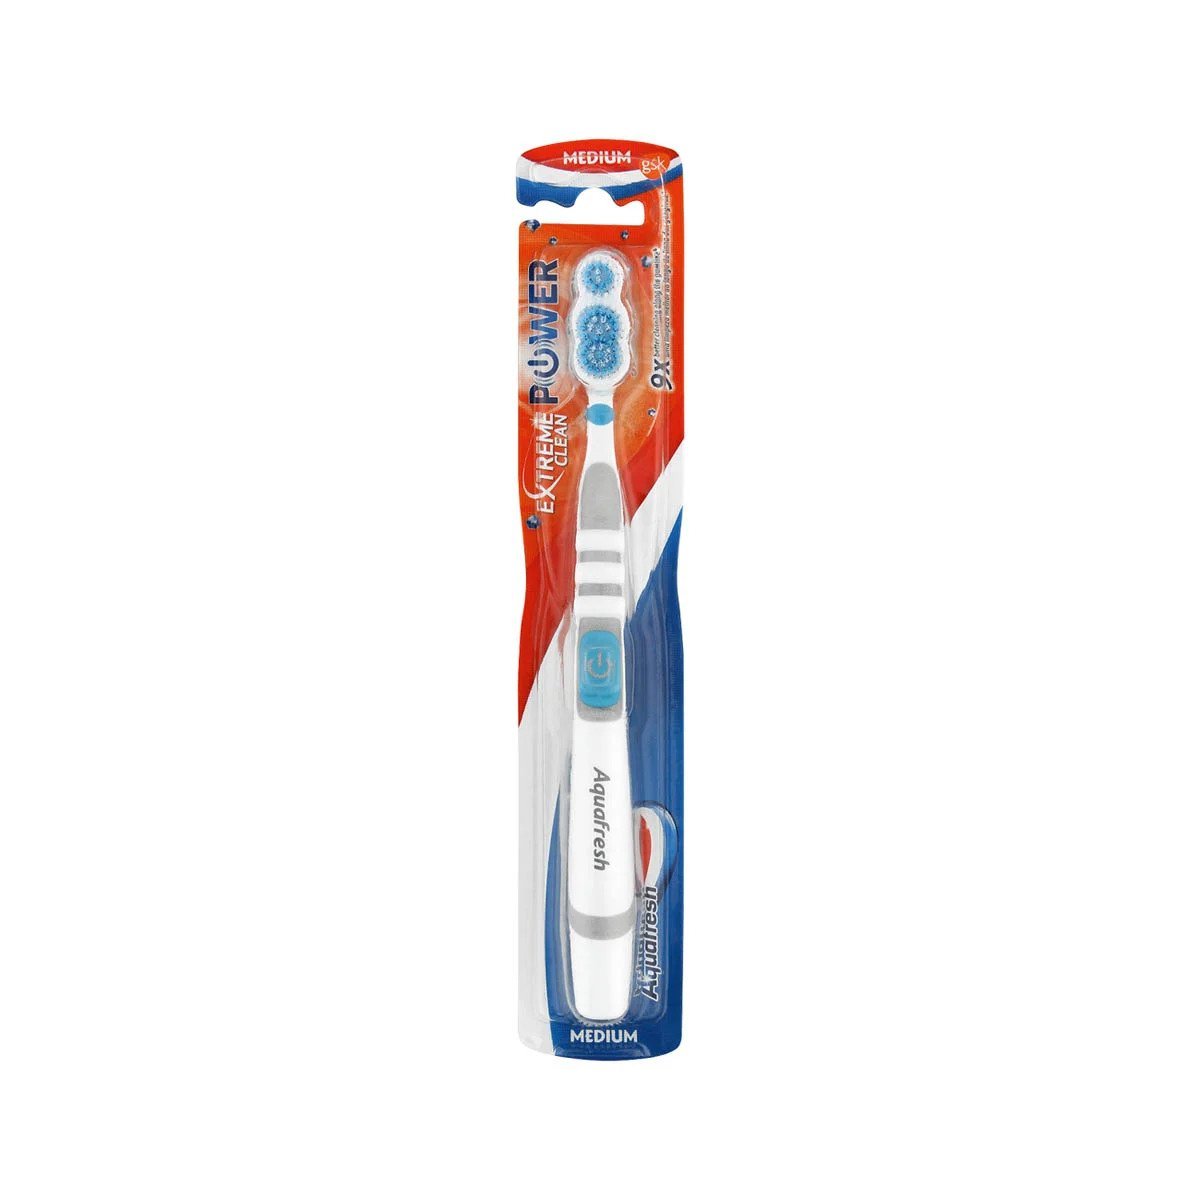 Aquafresh Extreme Clean Power Toothbrush, Medium